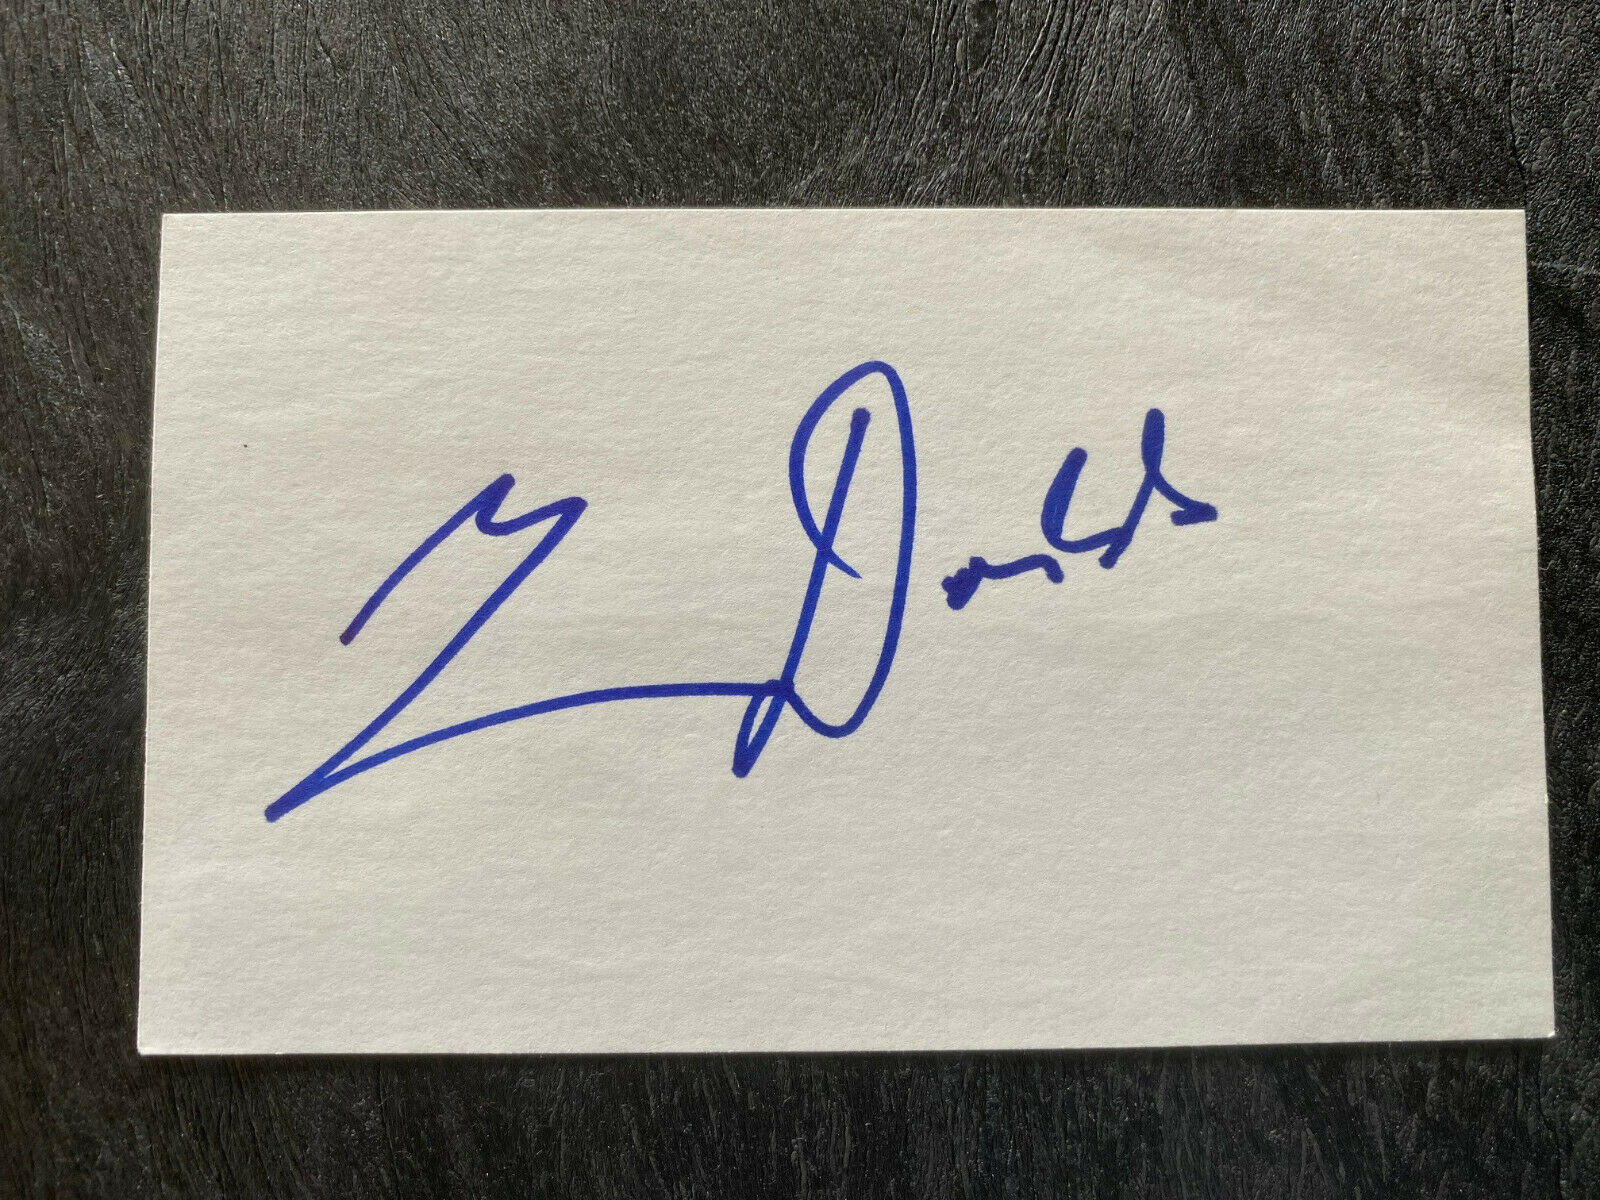 Luke Donald Autographed Hand Signed 3 X 5 Index Card - Pga Tour